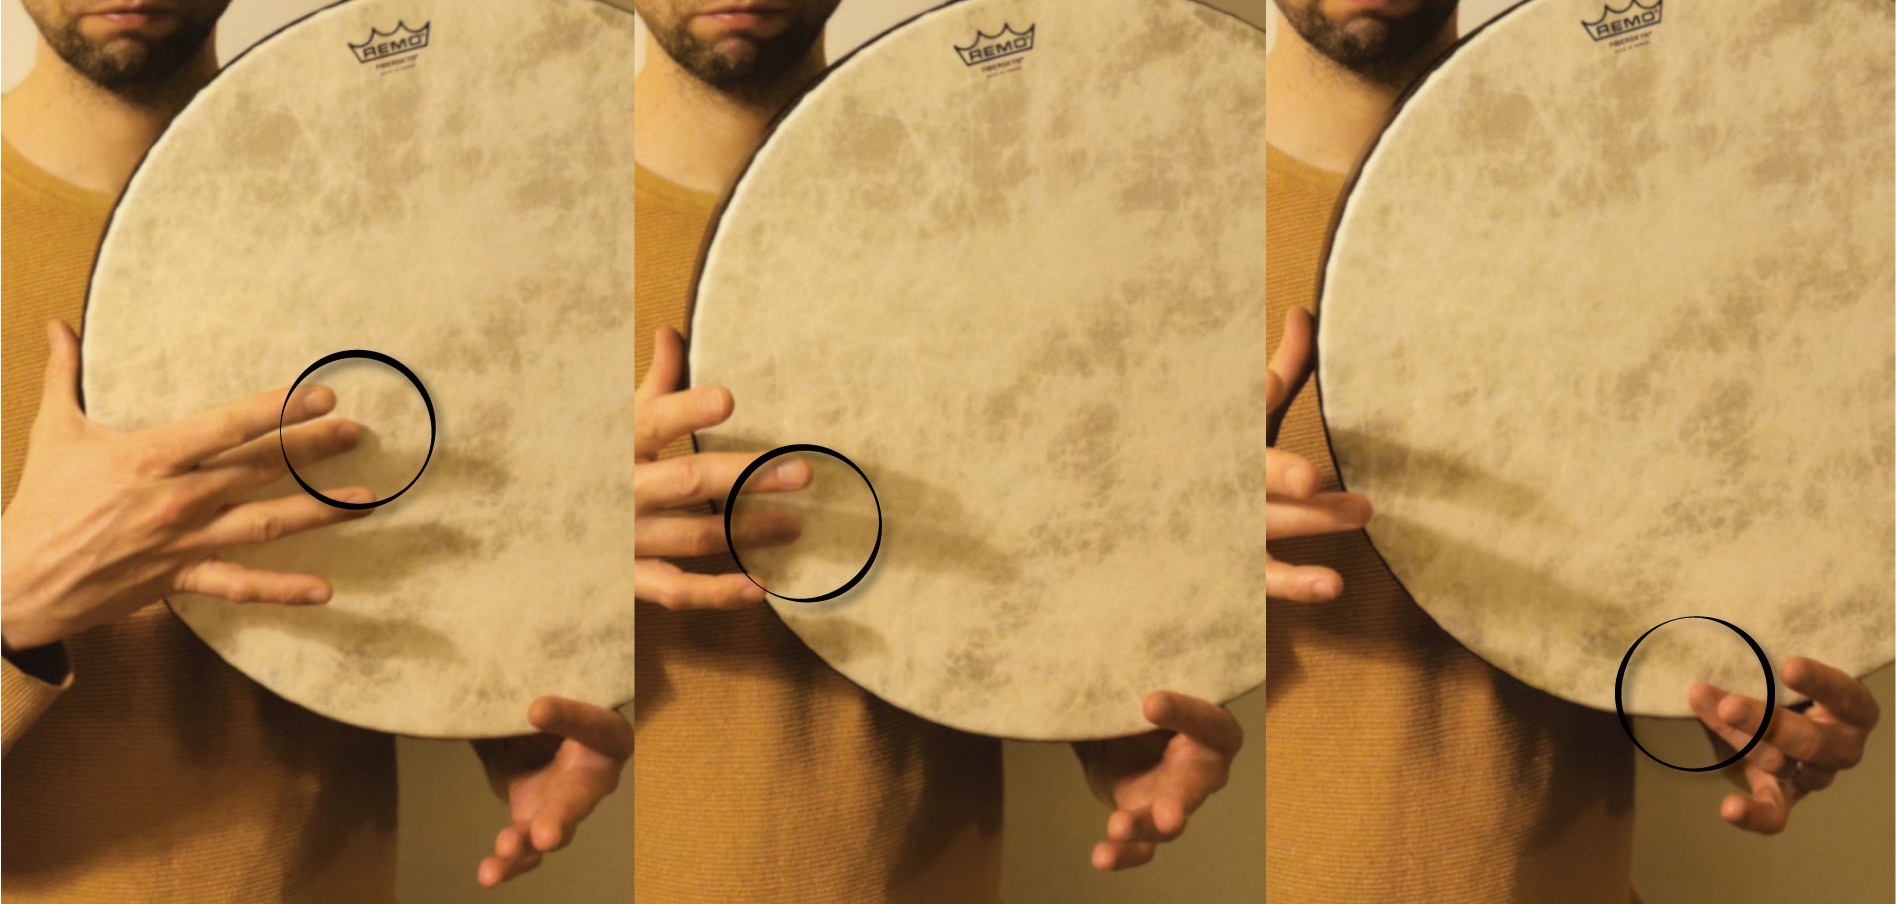 Frame drum sounds 'dum' (left), 'tak' (middle) and 'tek' (right).